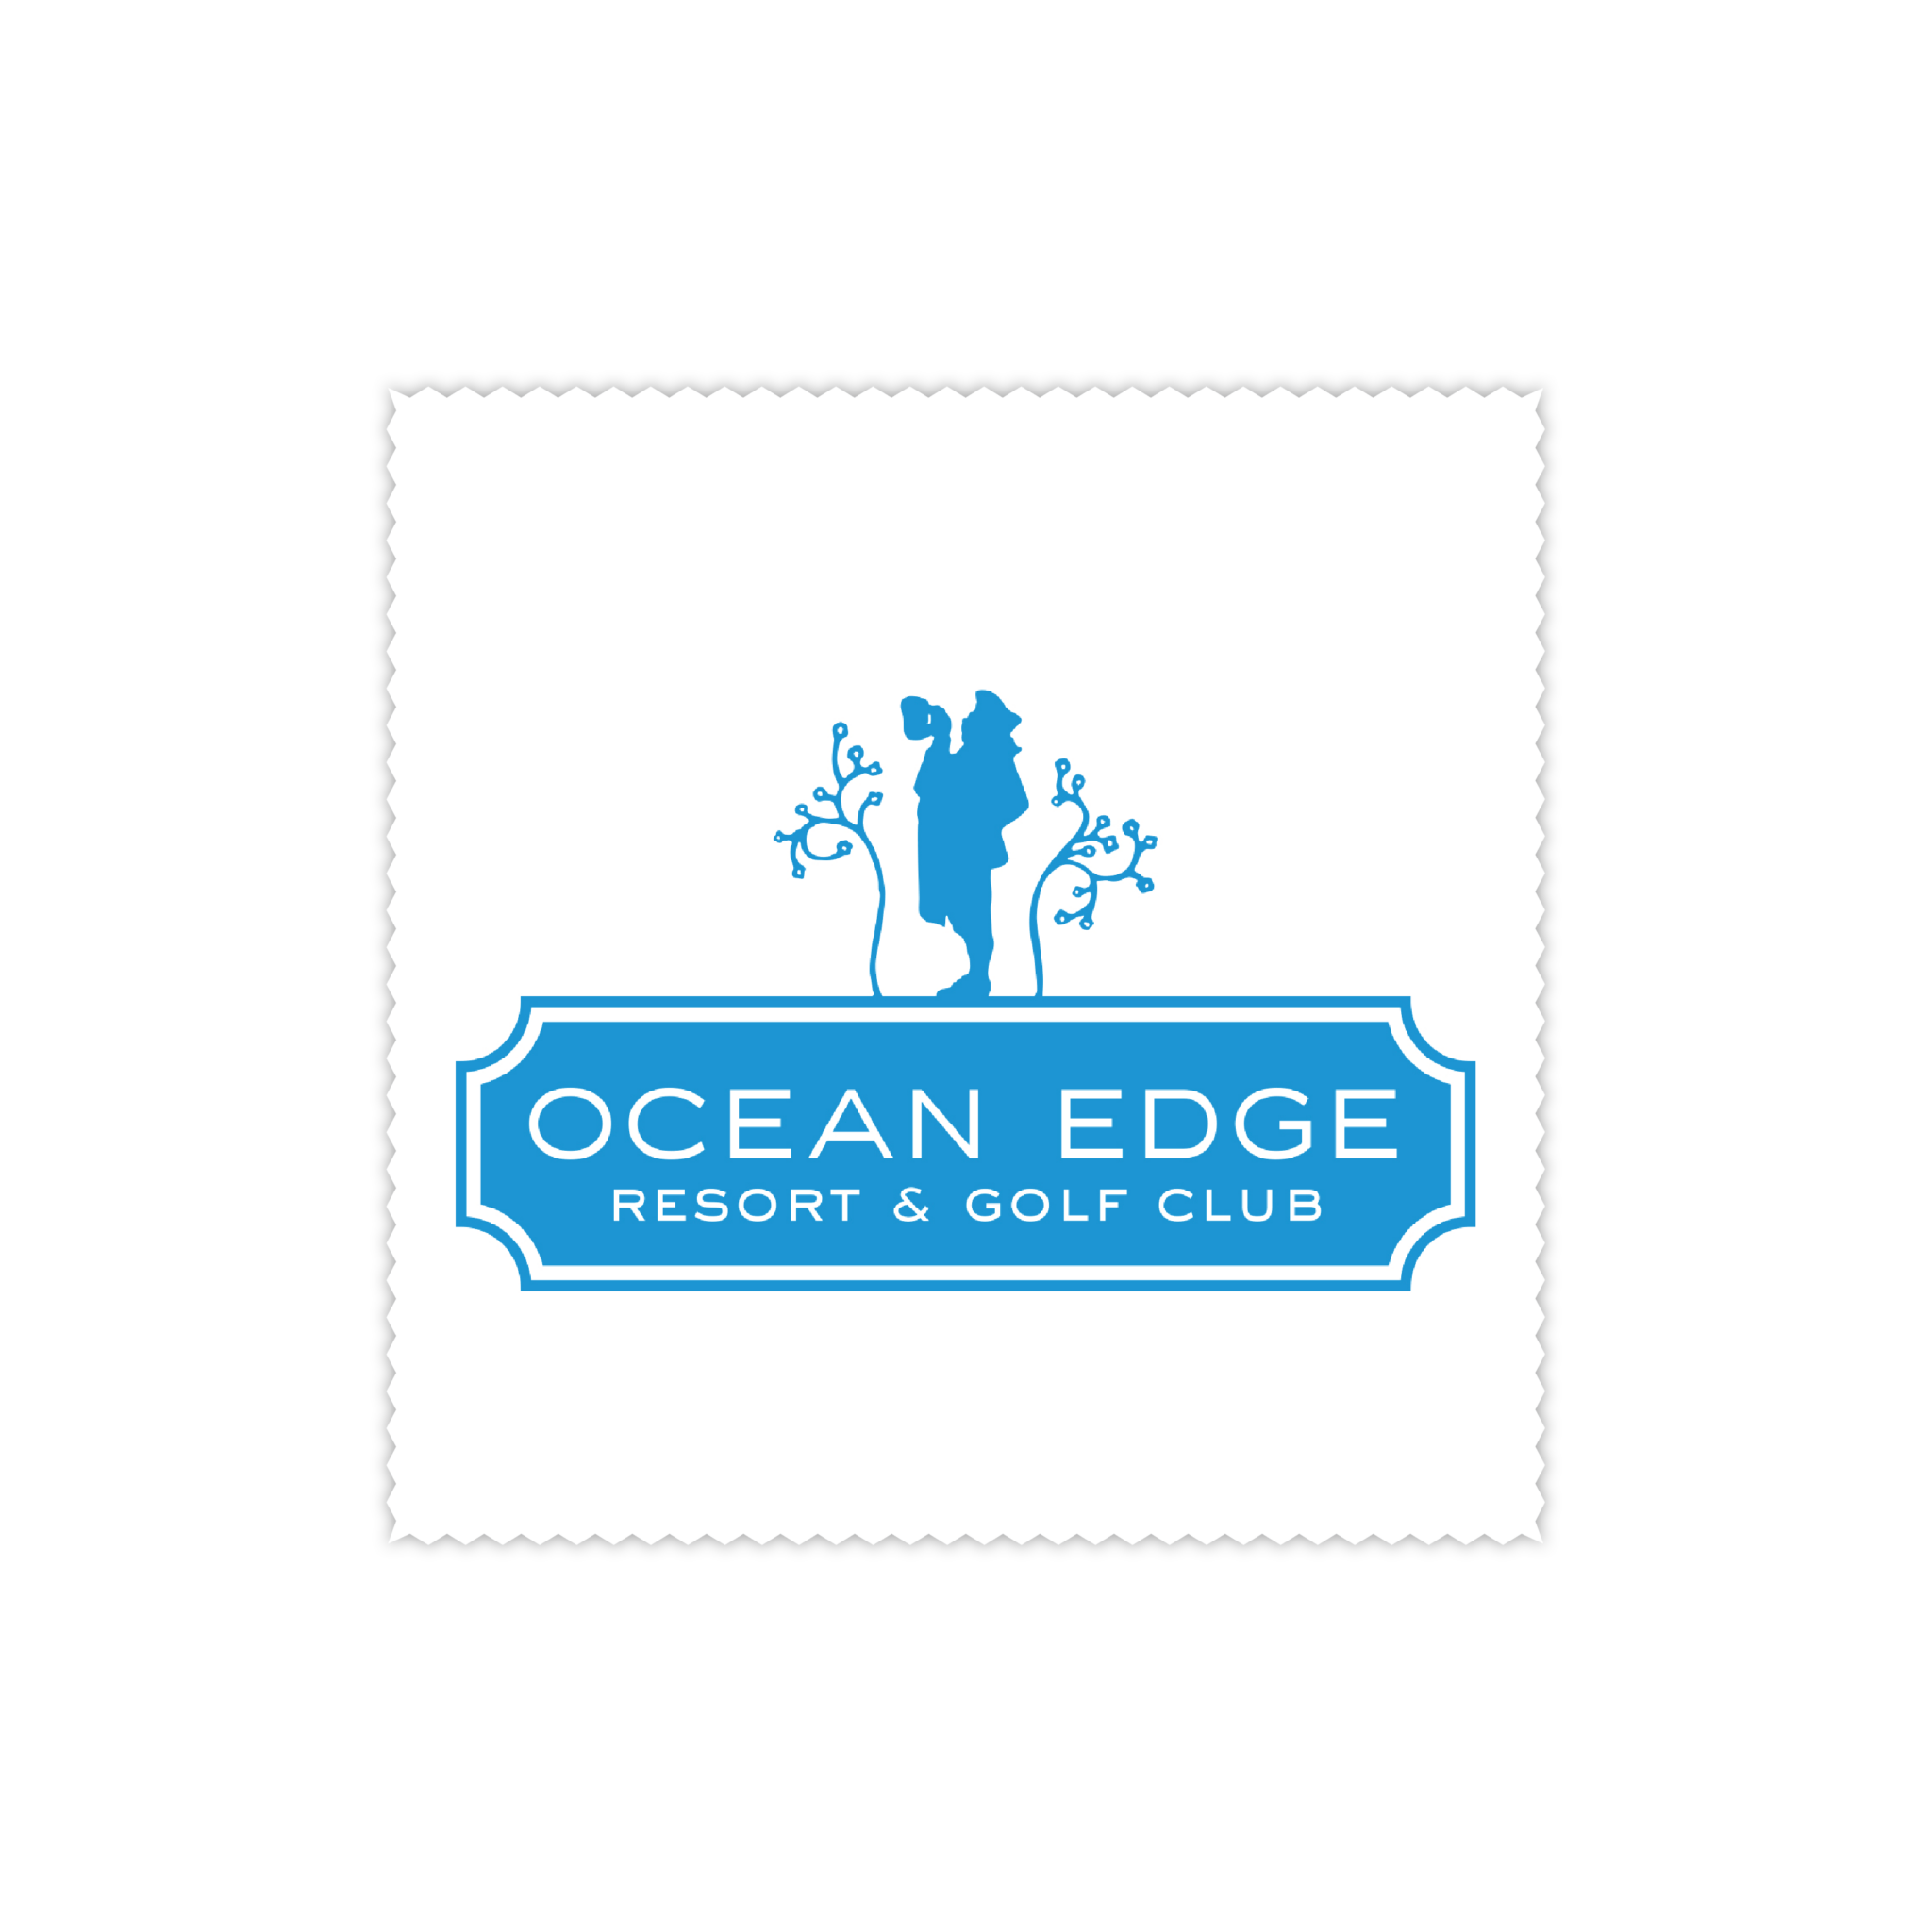 Ocean Edge Resort & Gold Club Branded Microfiber Cloth Design